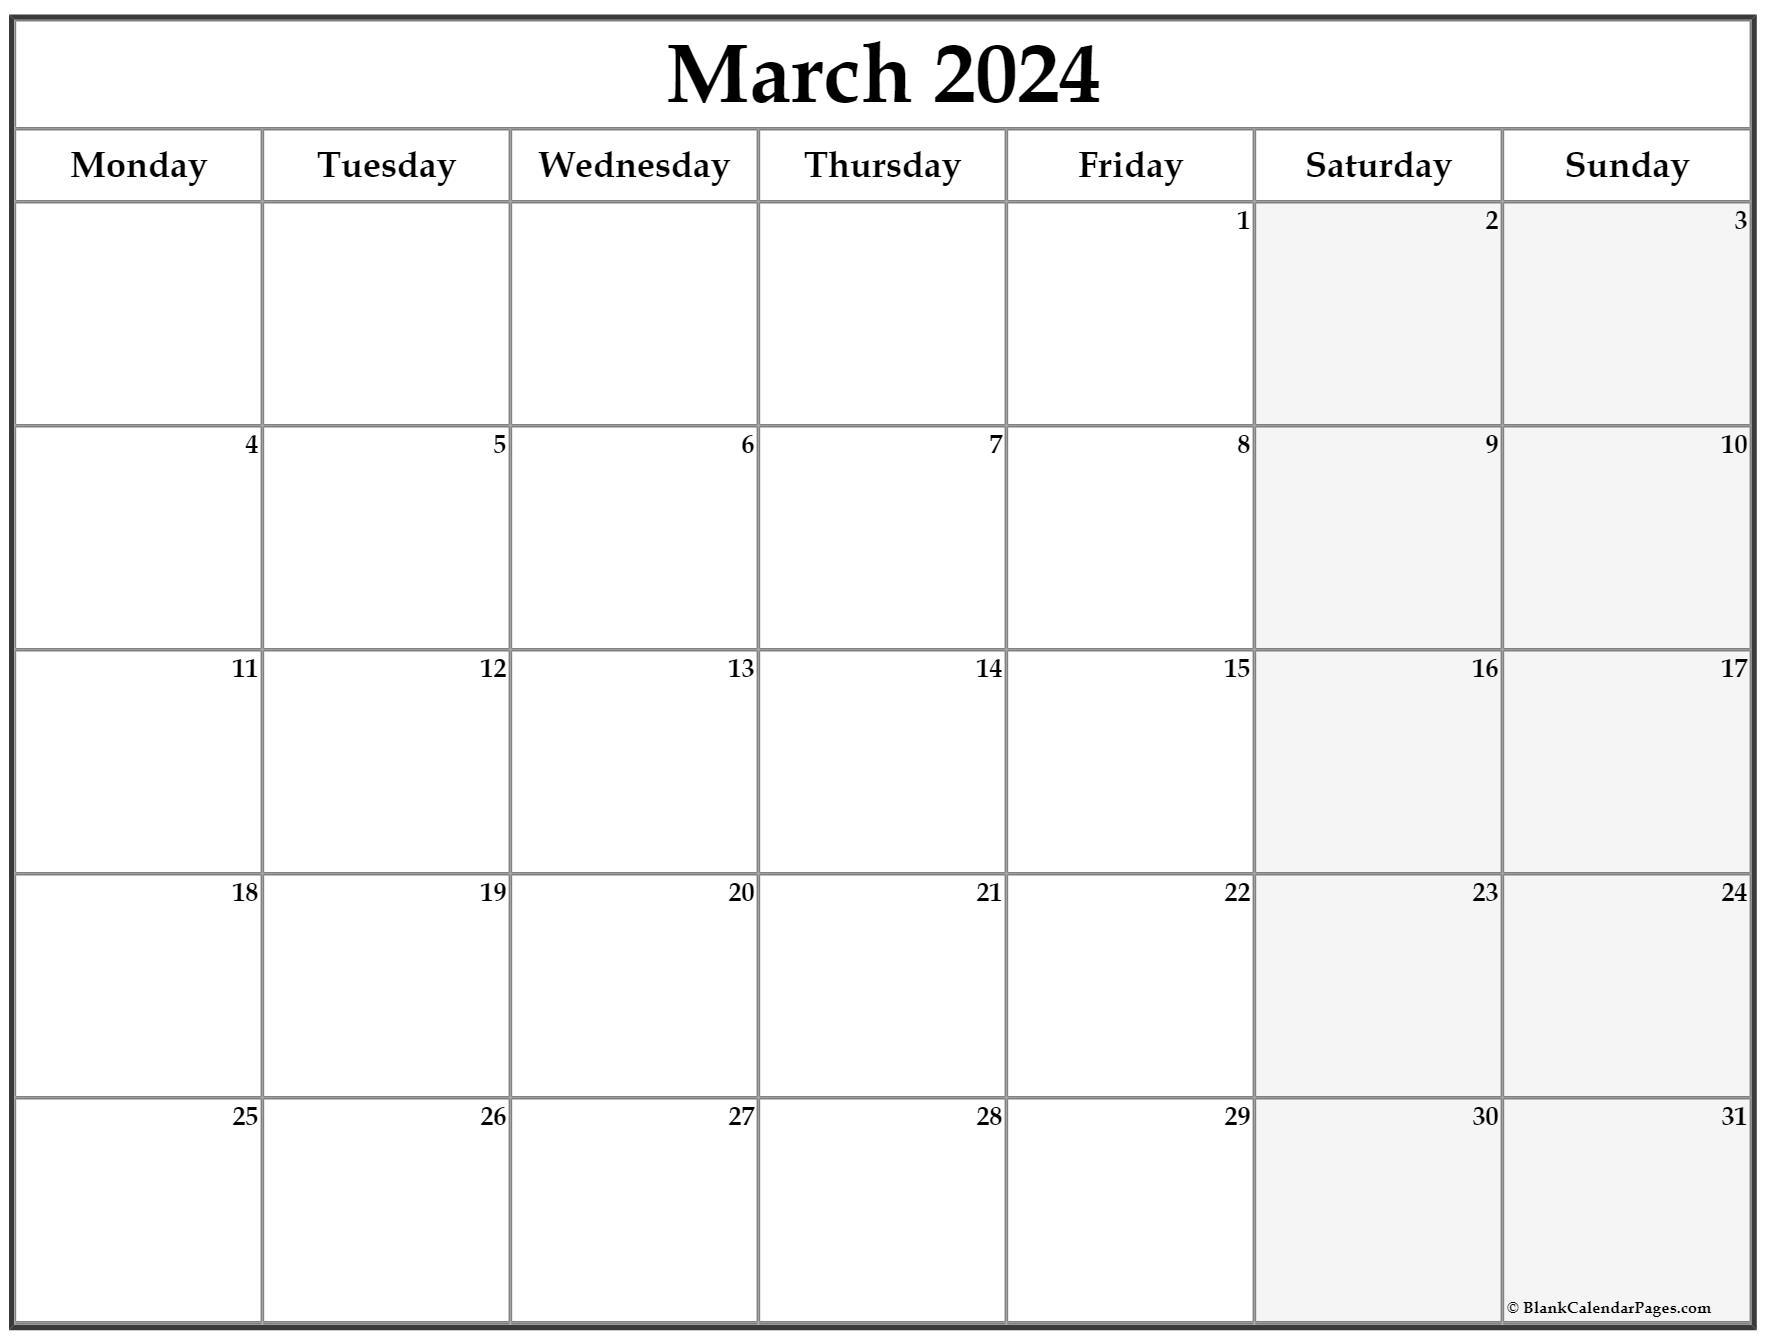 March 2024 Monday Calendar | Monday to Sunday